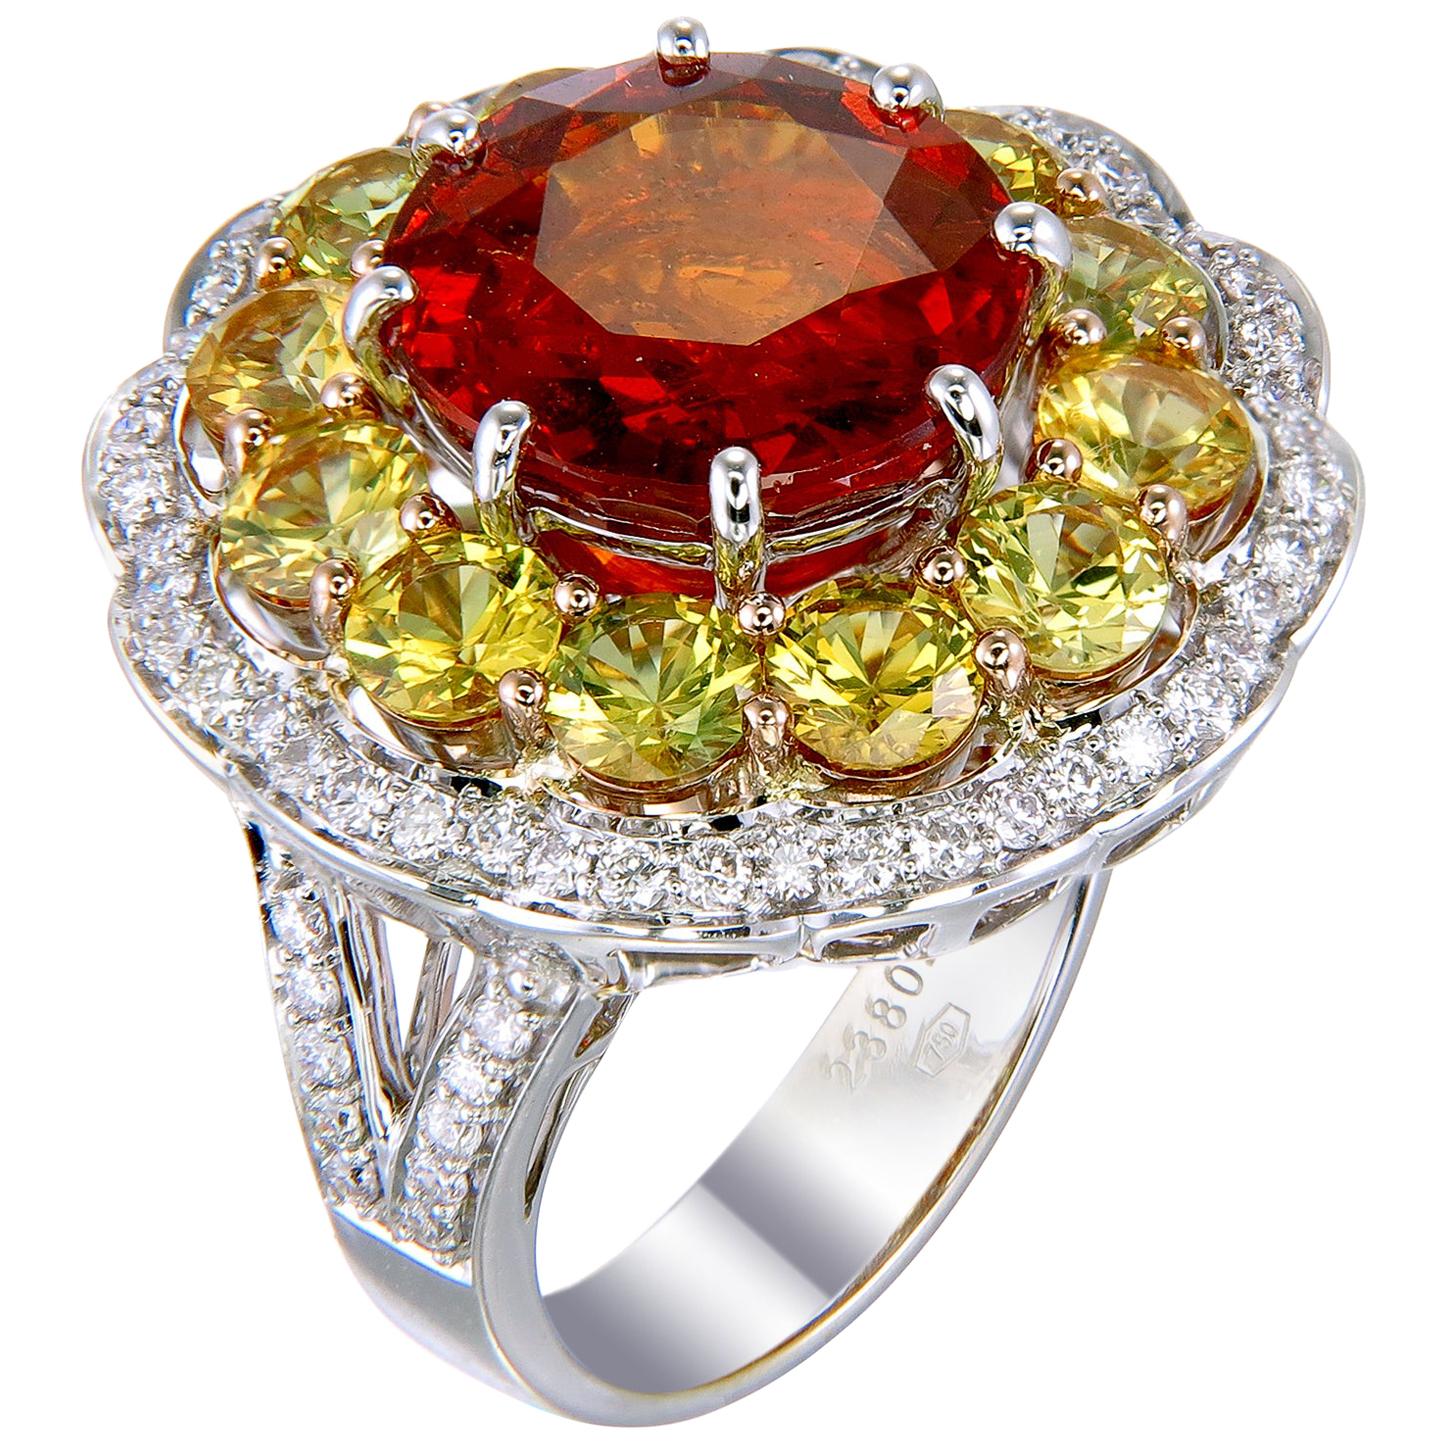 Zorab Creation-Merry-Go-Round 8.38 Carat Spessartite Garnet and Diamond Ring For Sale